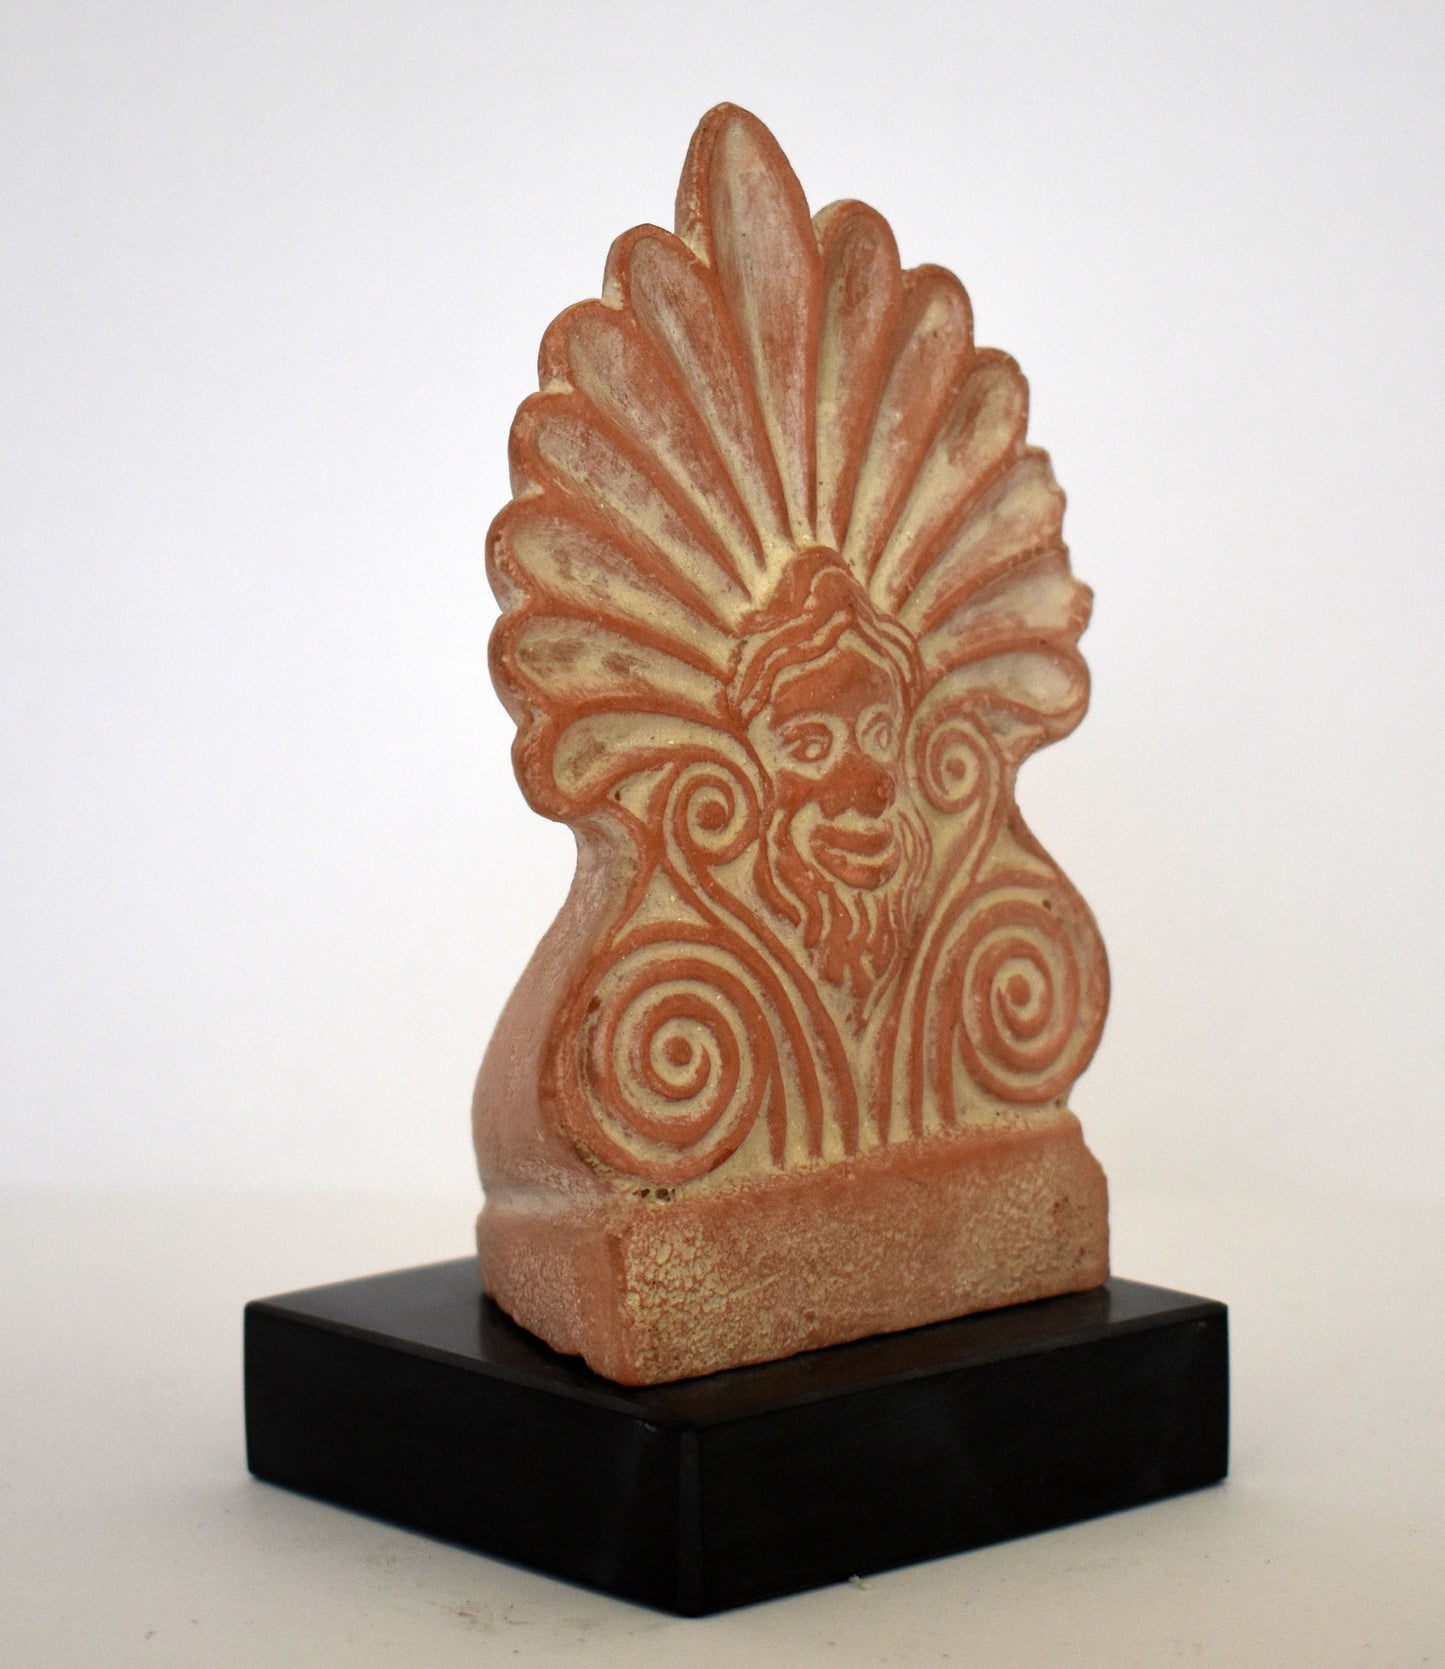 Akrokeramo - Antefix, Distal Tile - Floral Design and Satyr Head - Marble Base - Ceramic